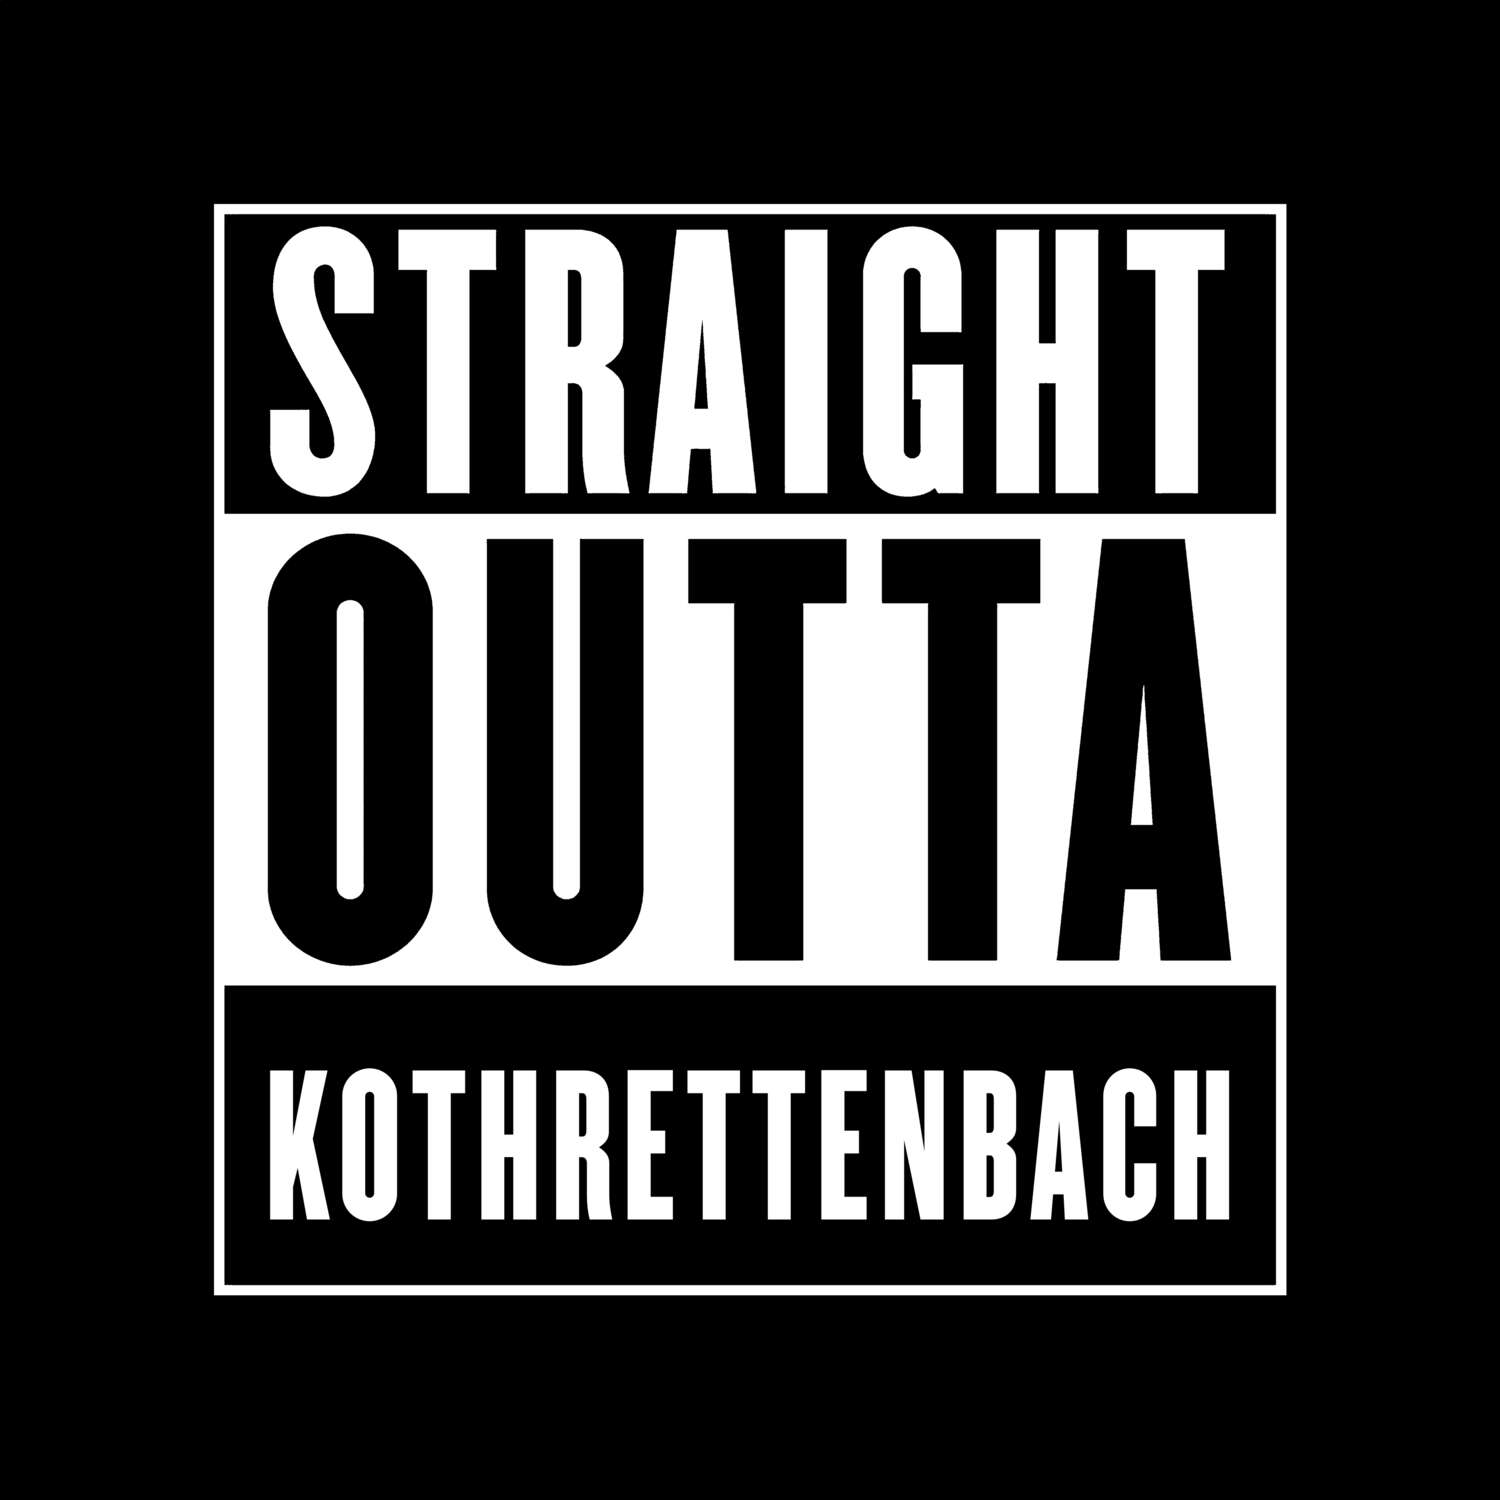 Kothrettenbach T-Shirt »Straight Outta«